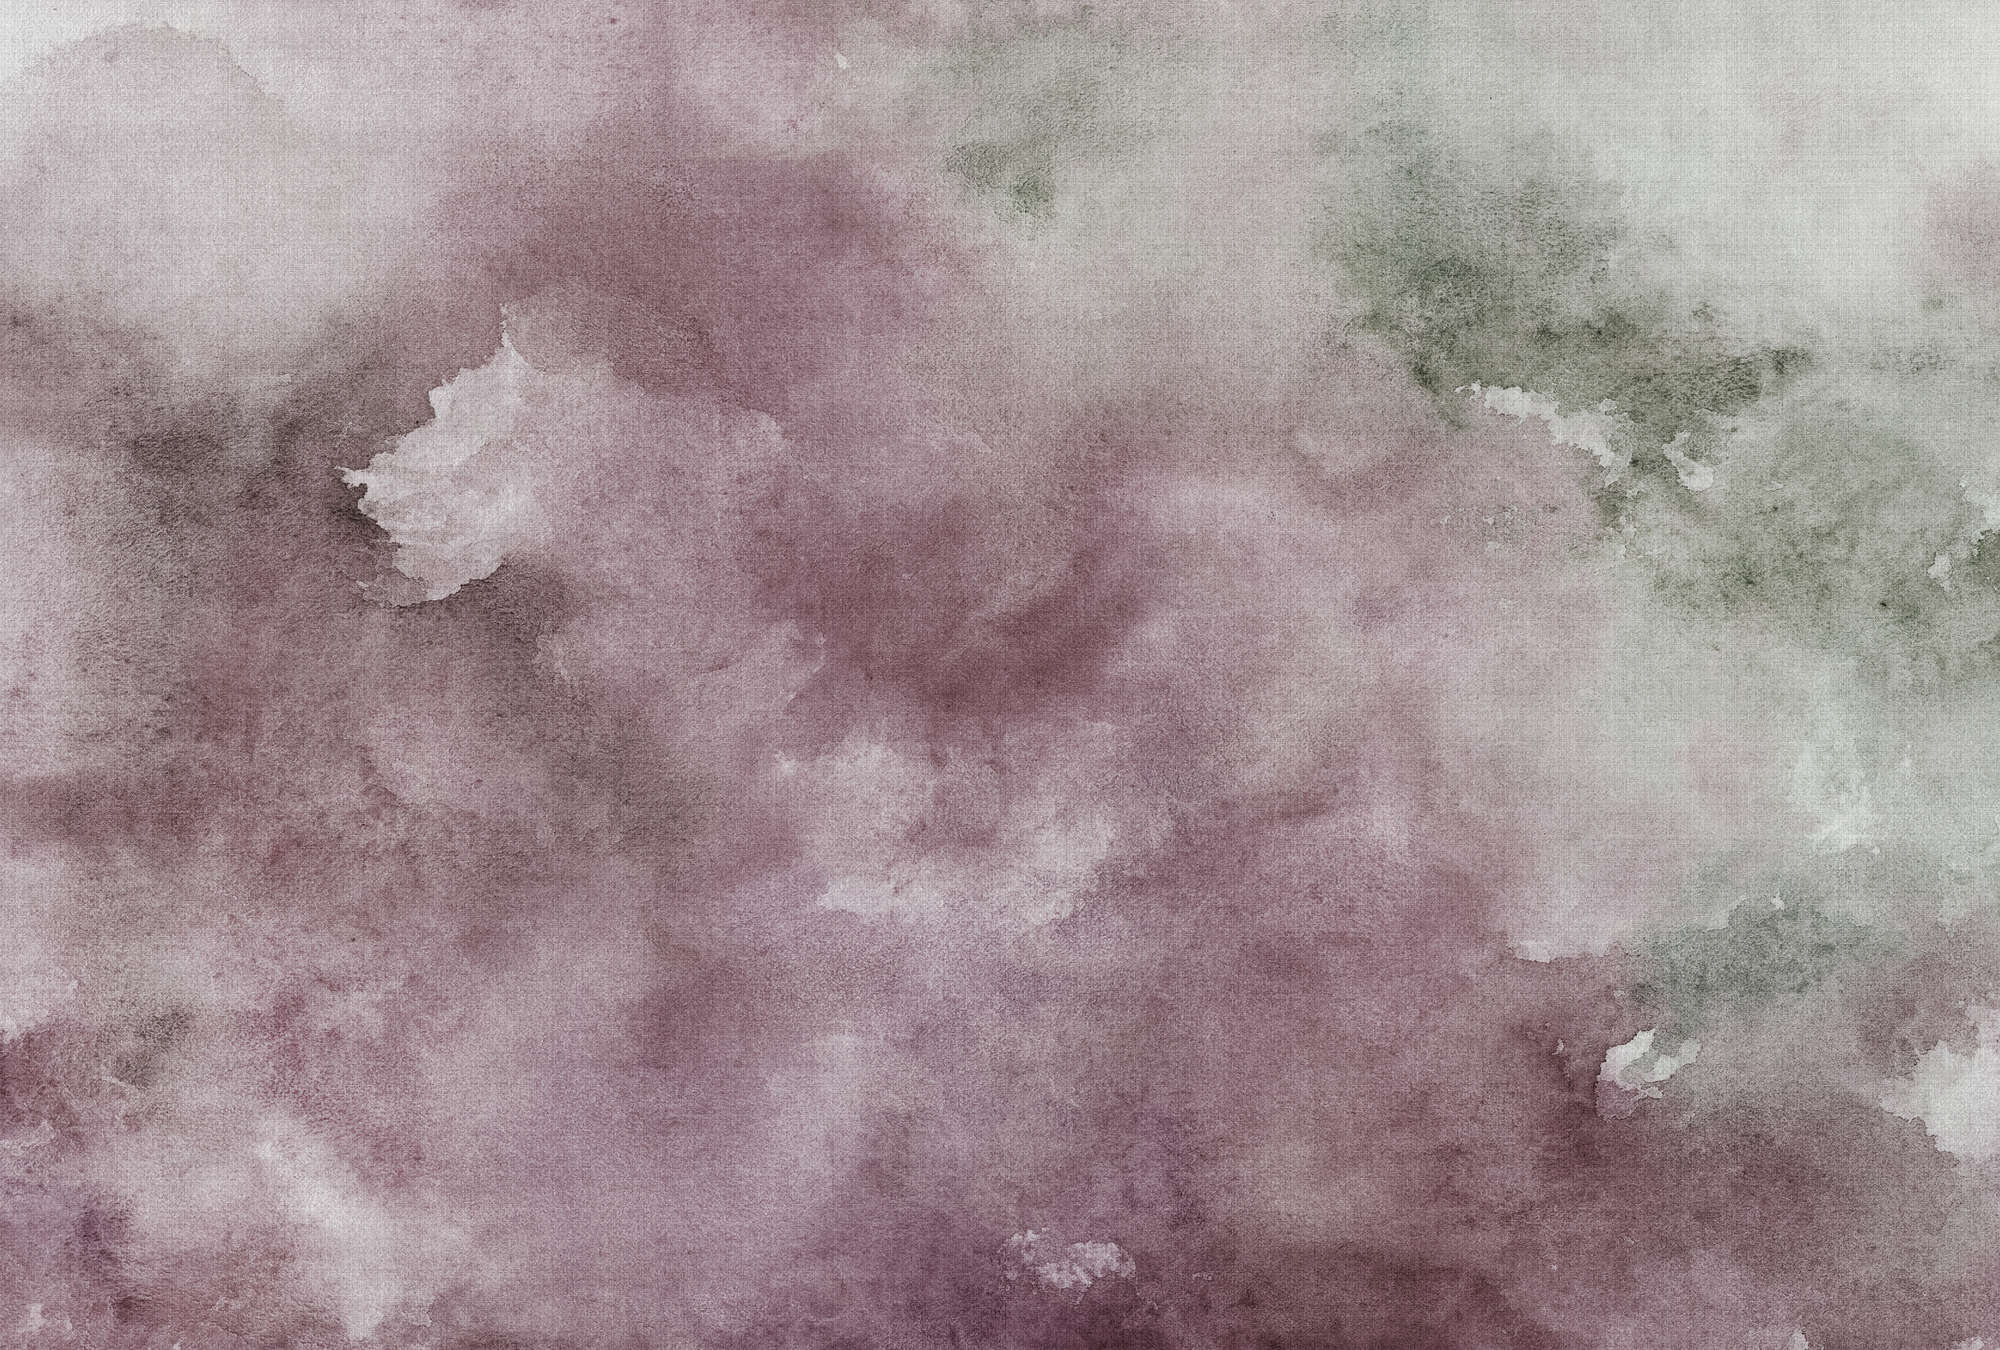             Watercolours 2 - Wallpaper Watercolours Motif Violet- Nature Linen Texture - Beige, Brown | Matt Smooth Non-woven
        